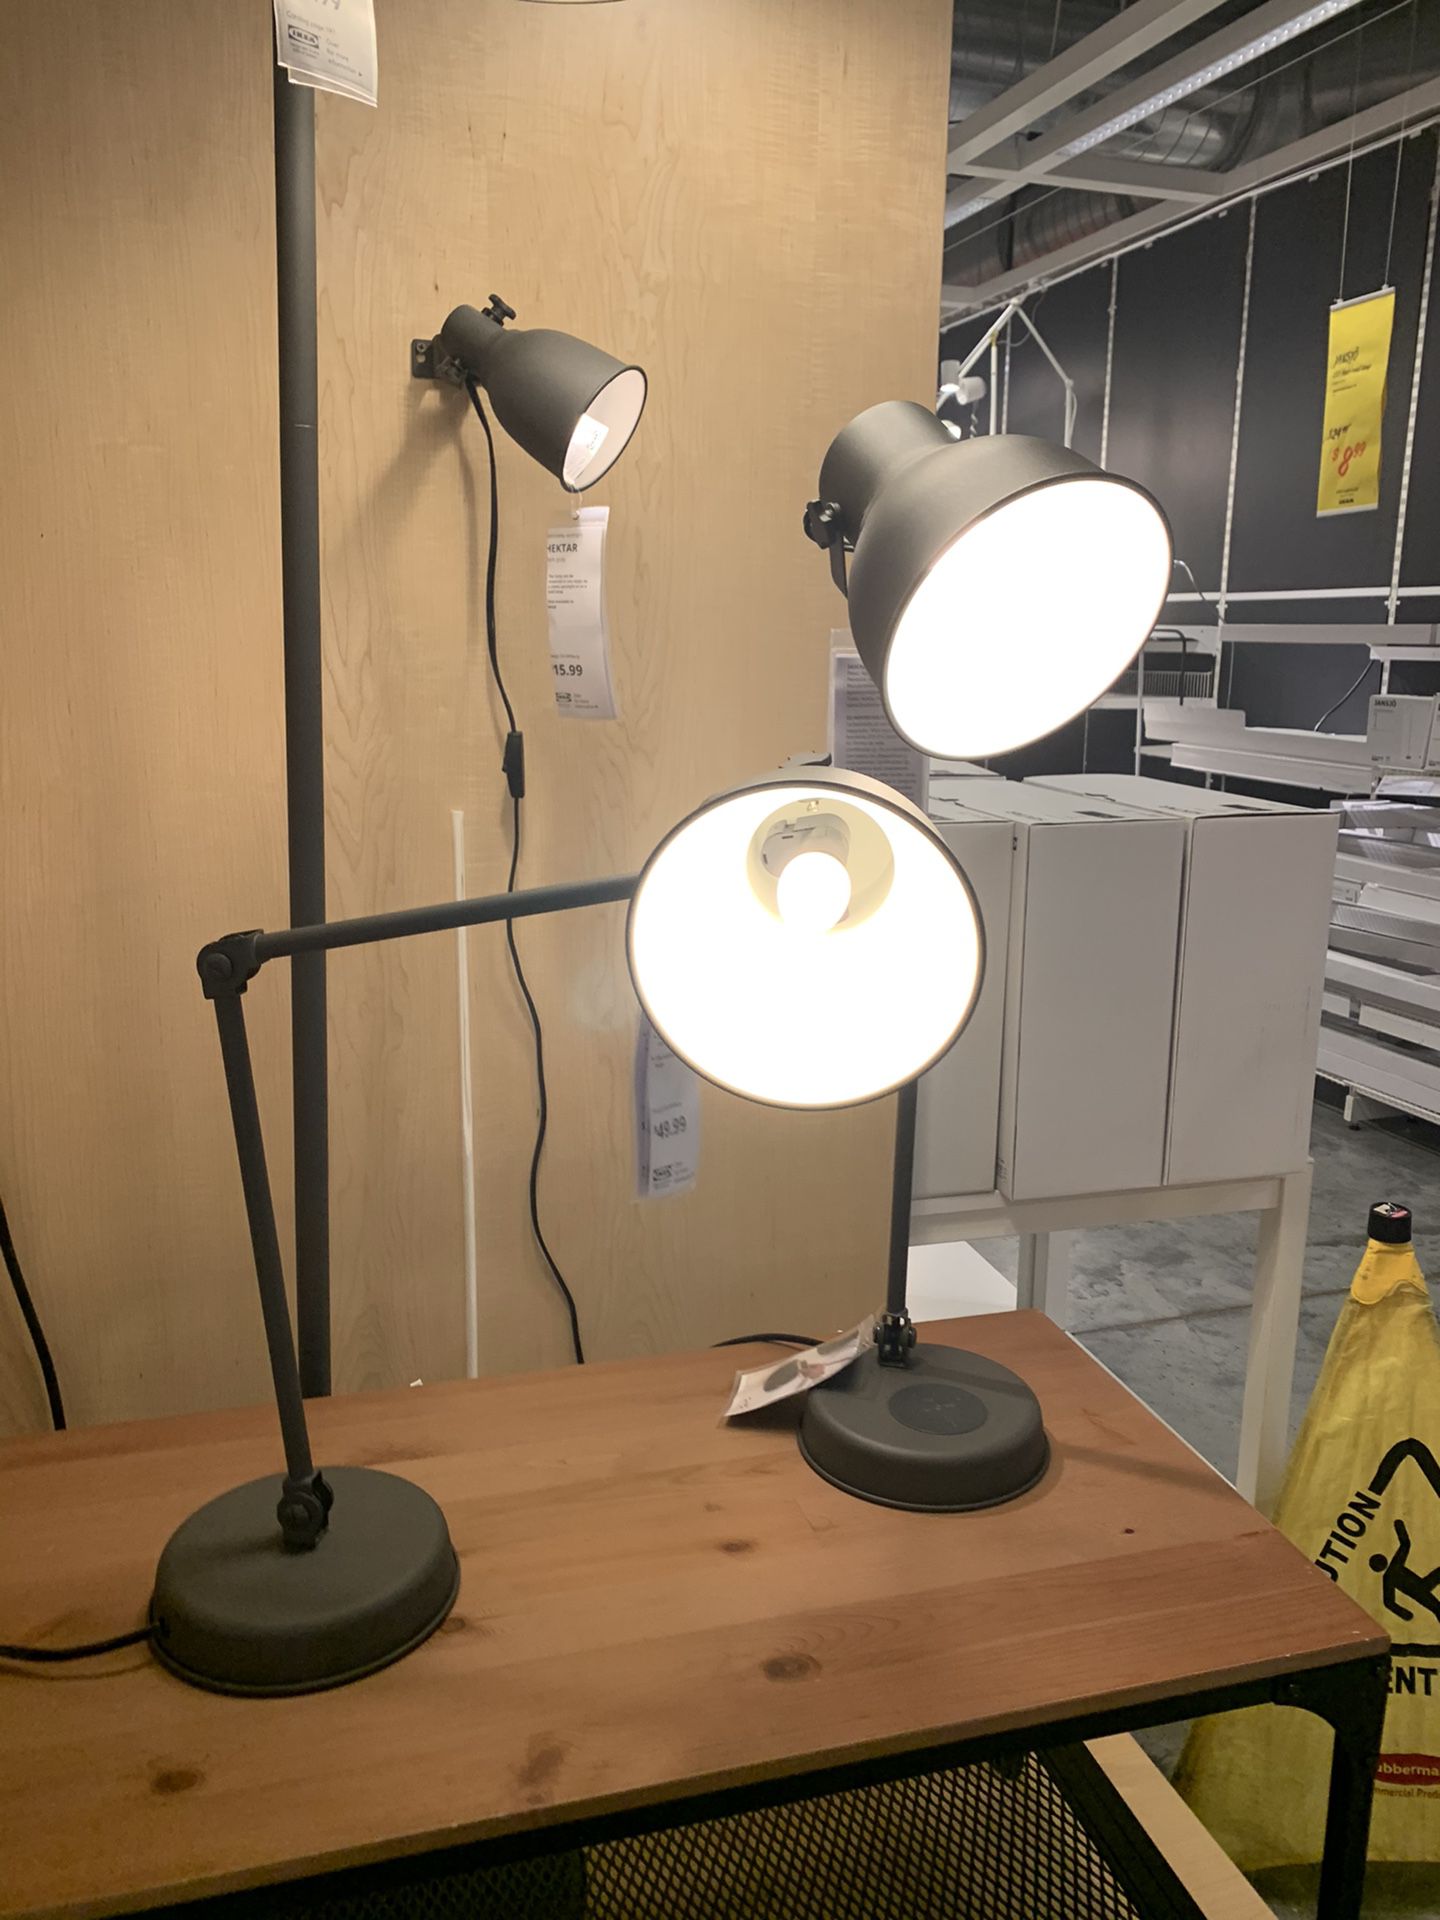 Phone charging lamp IKEA